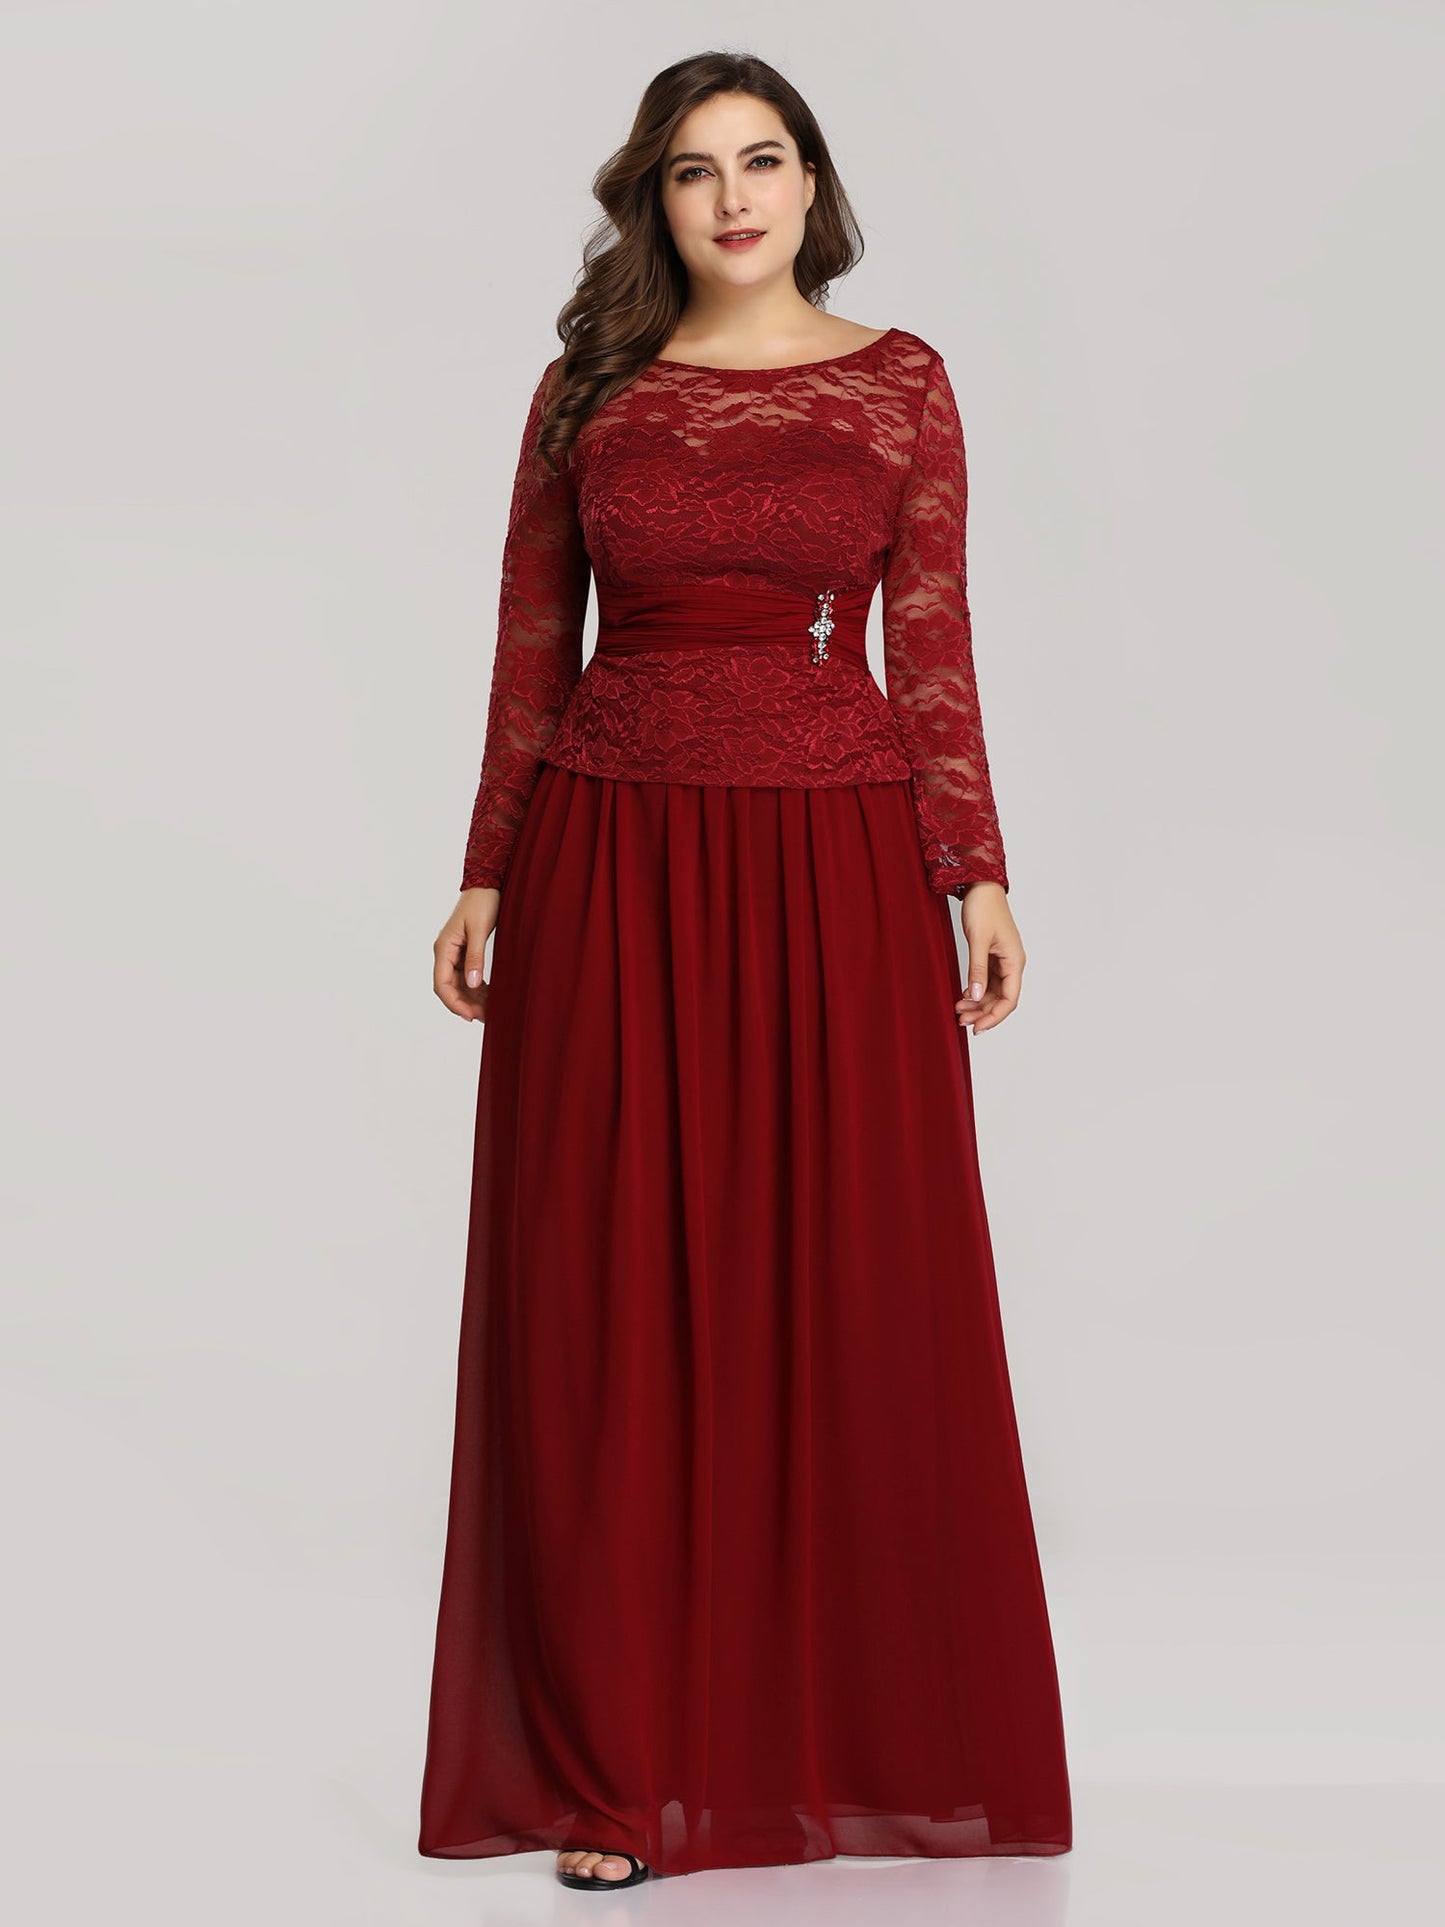 Long Sleeve Burgundy Lace Dresses for Women